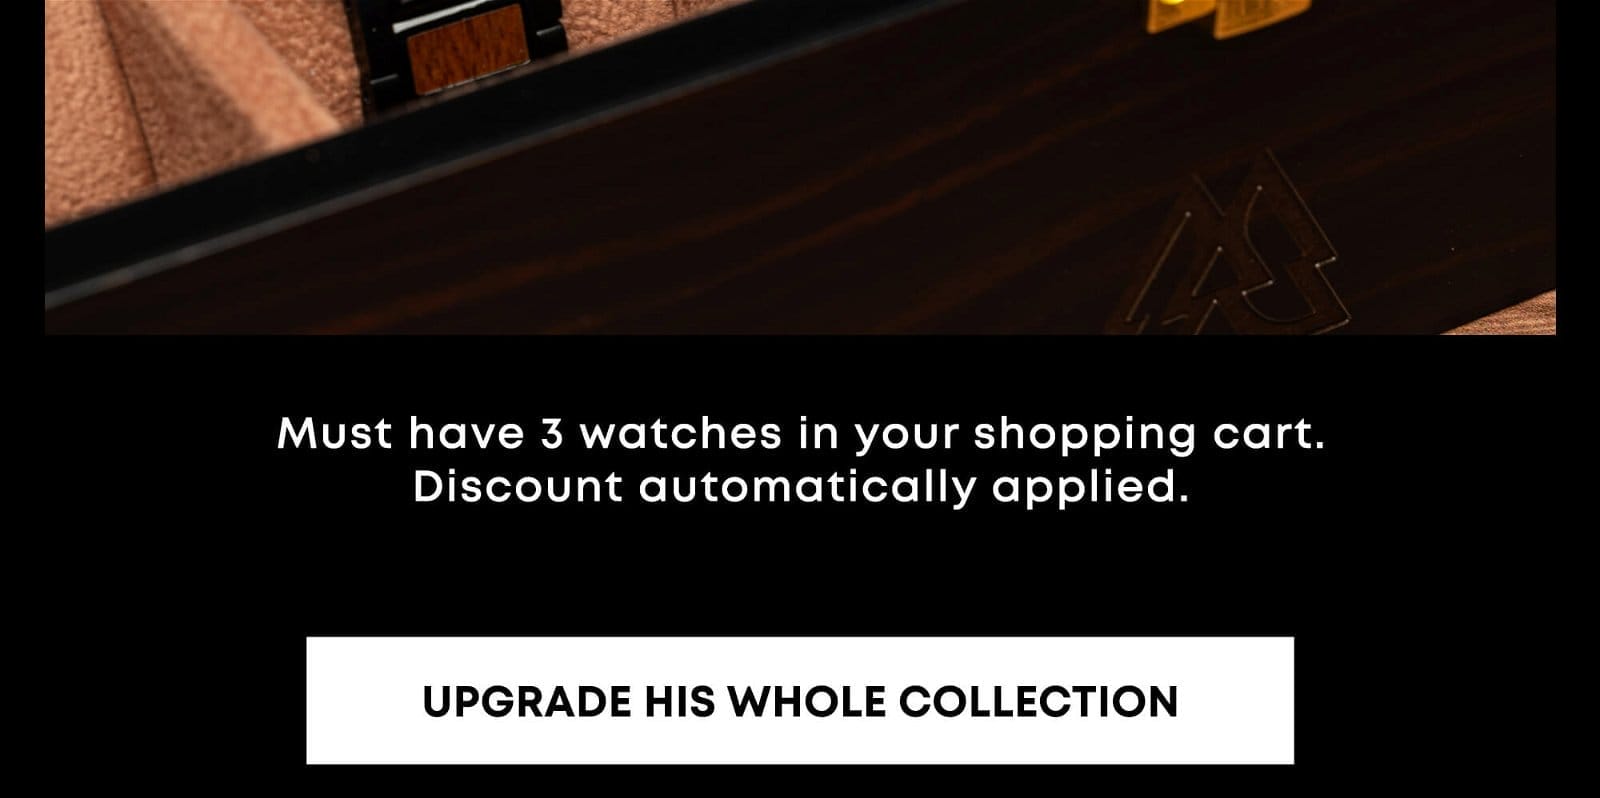 Original Grain's Buy 2 Watches, Get the 3rd Watch Free!